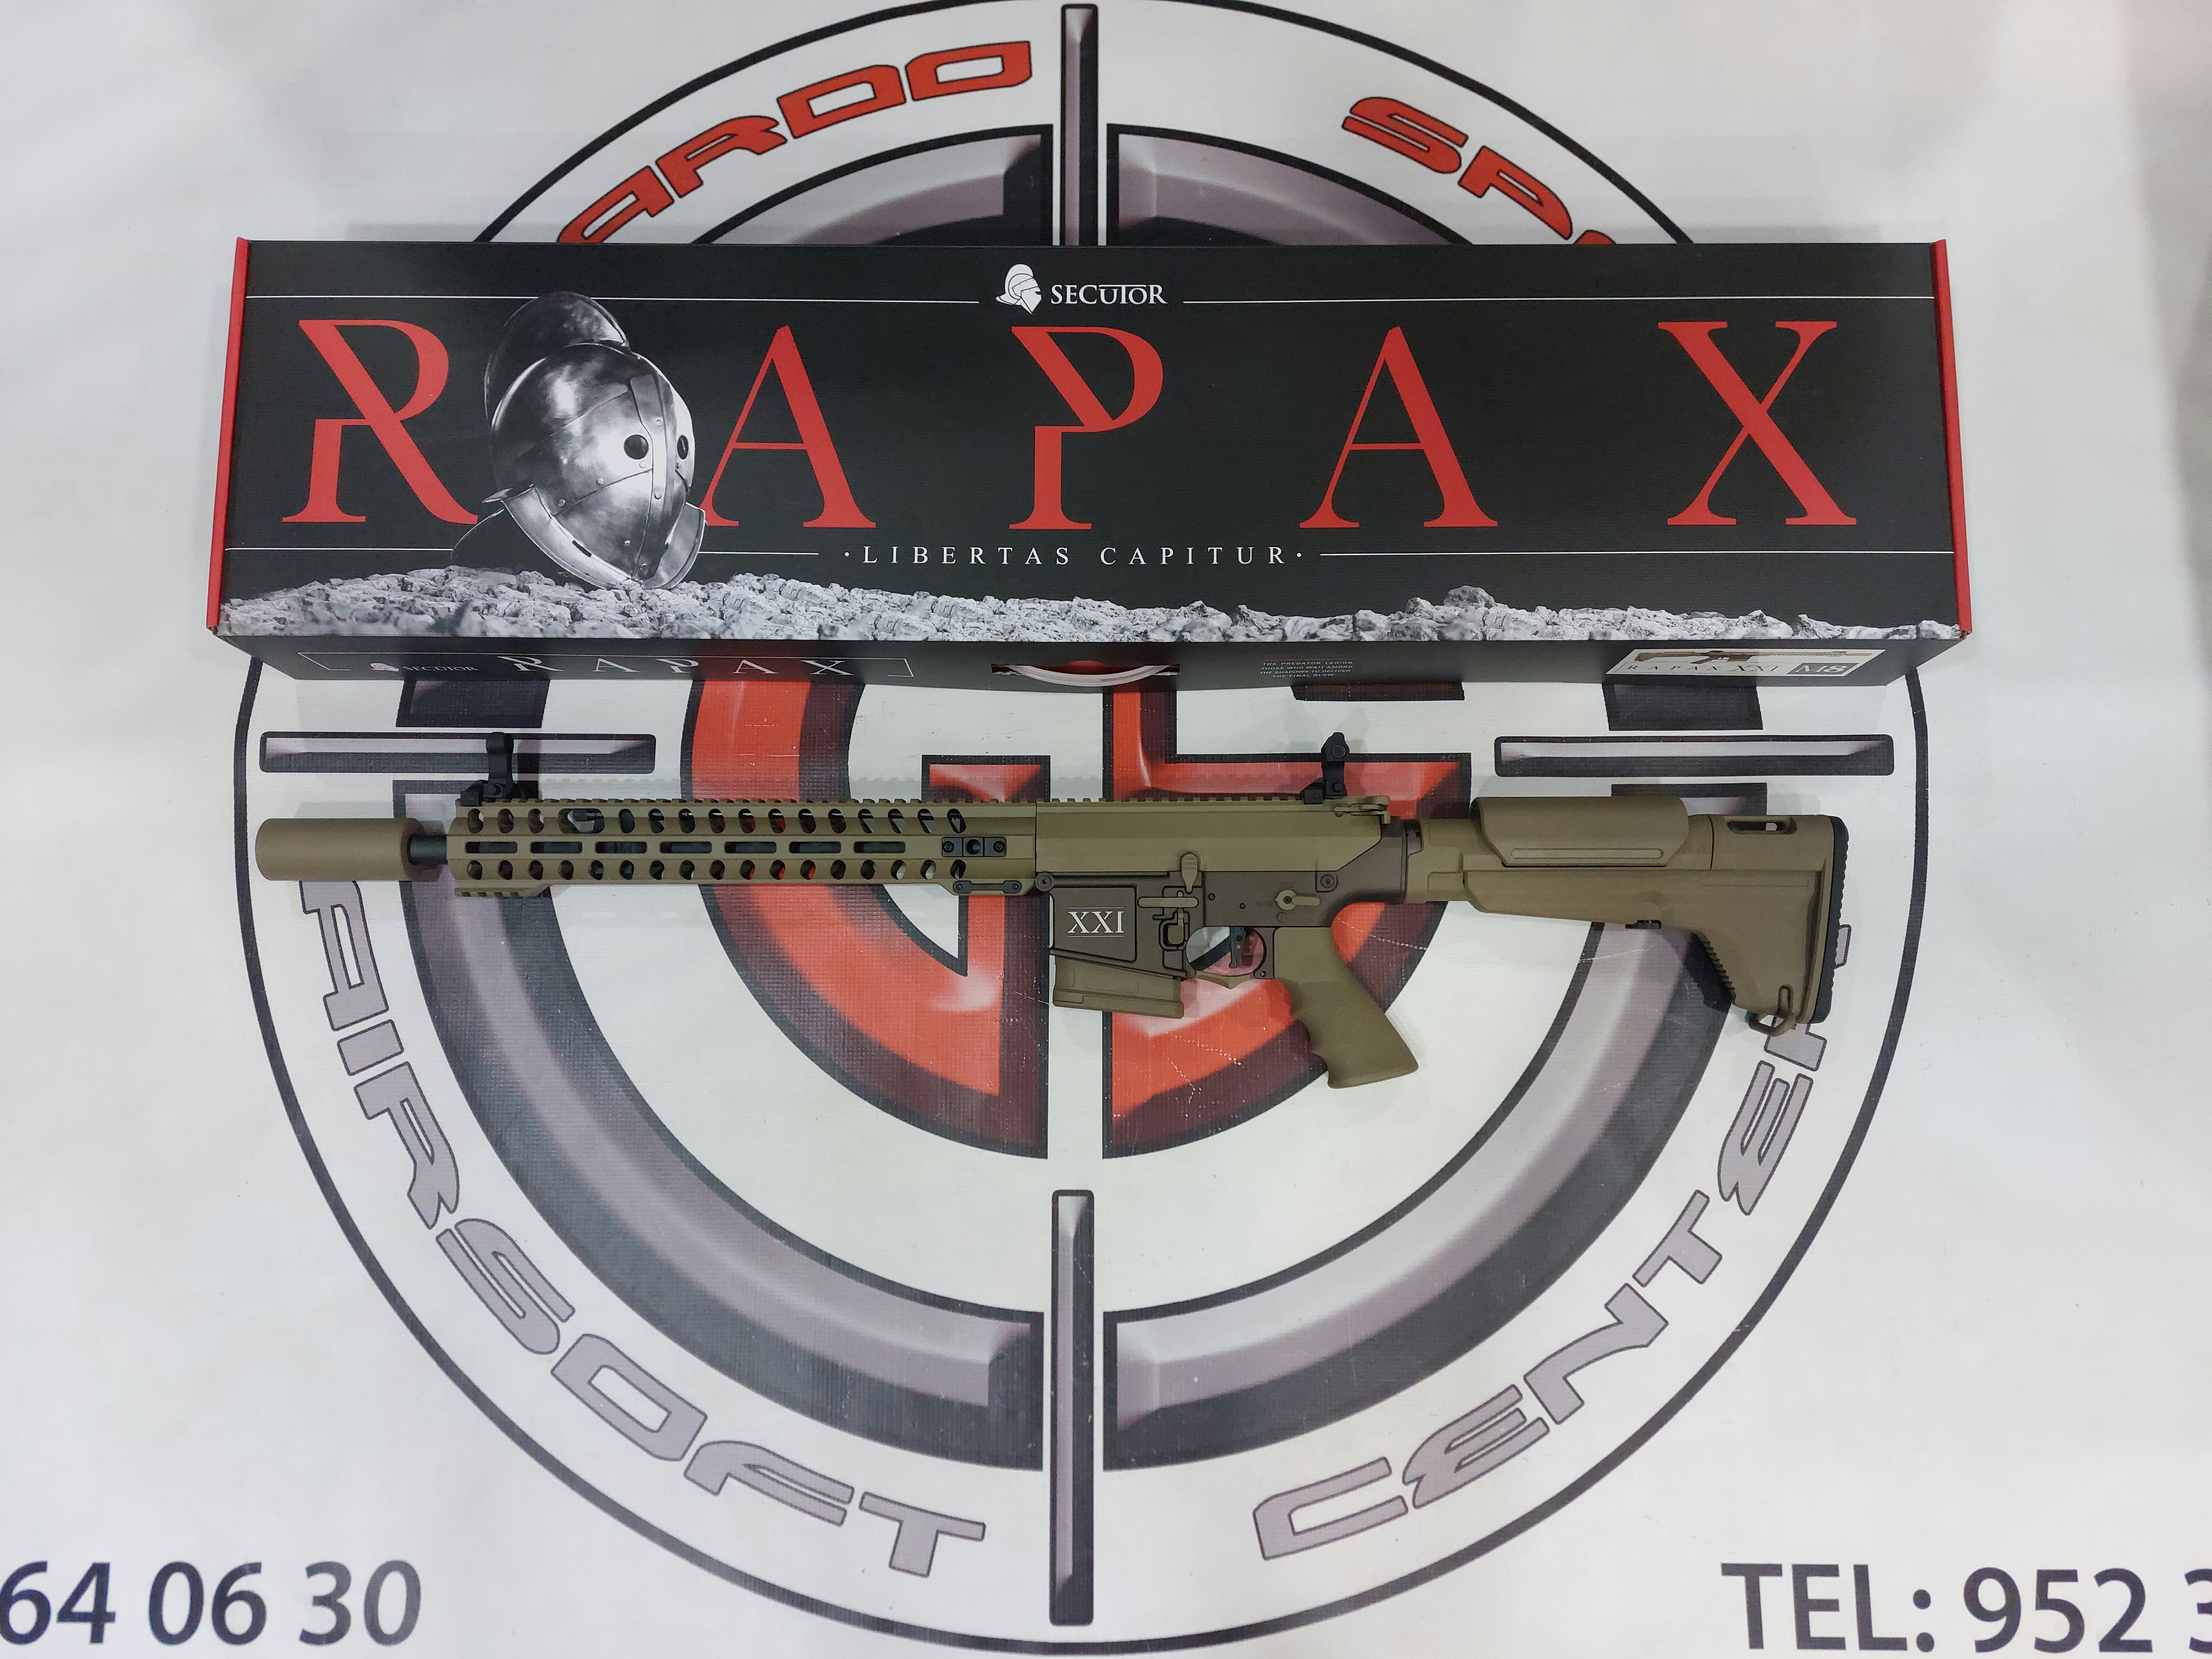 DMR RAPAX XXI M.8 SECUTOR ARMS